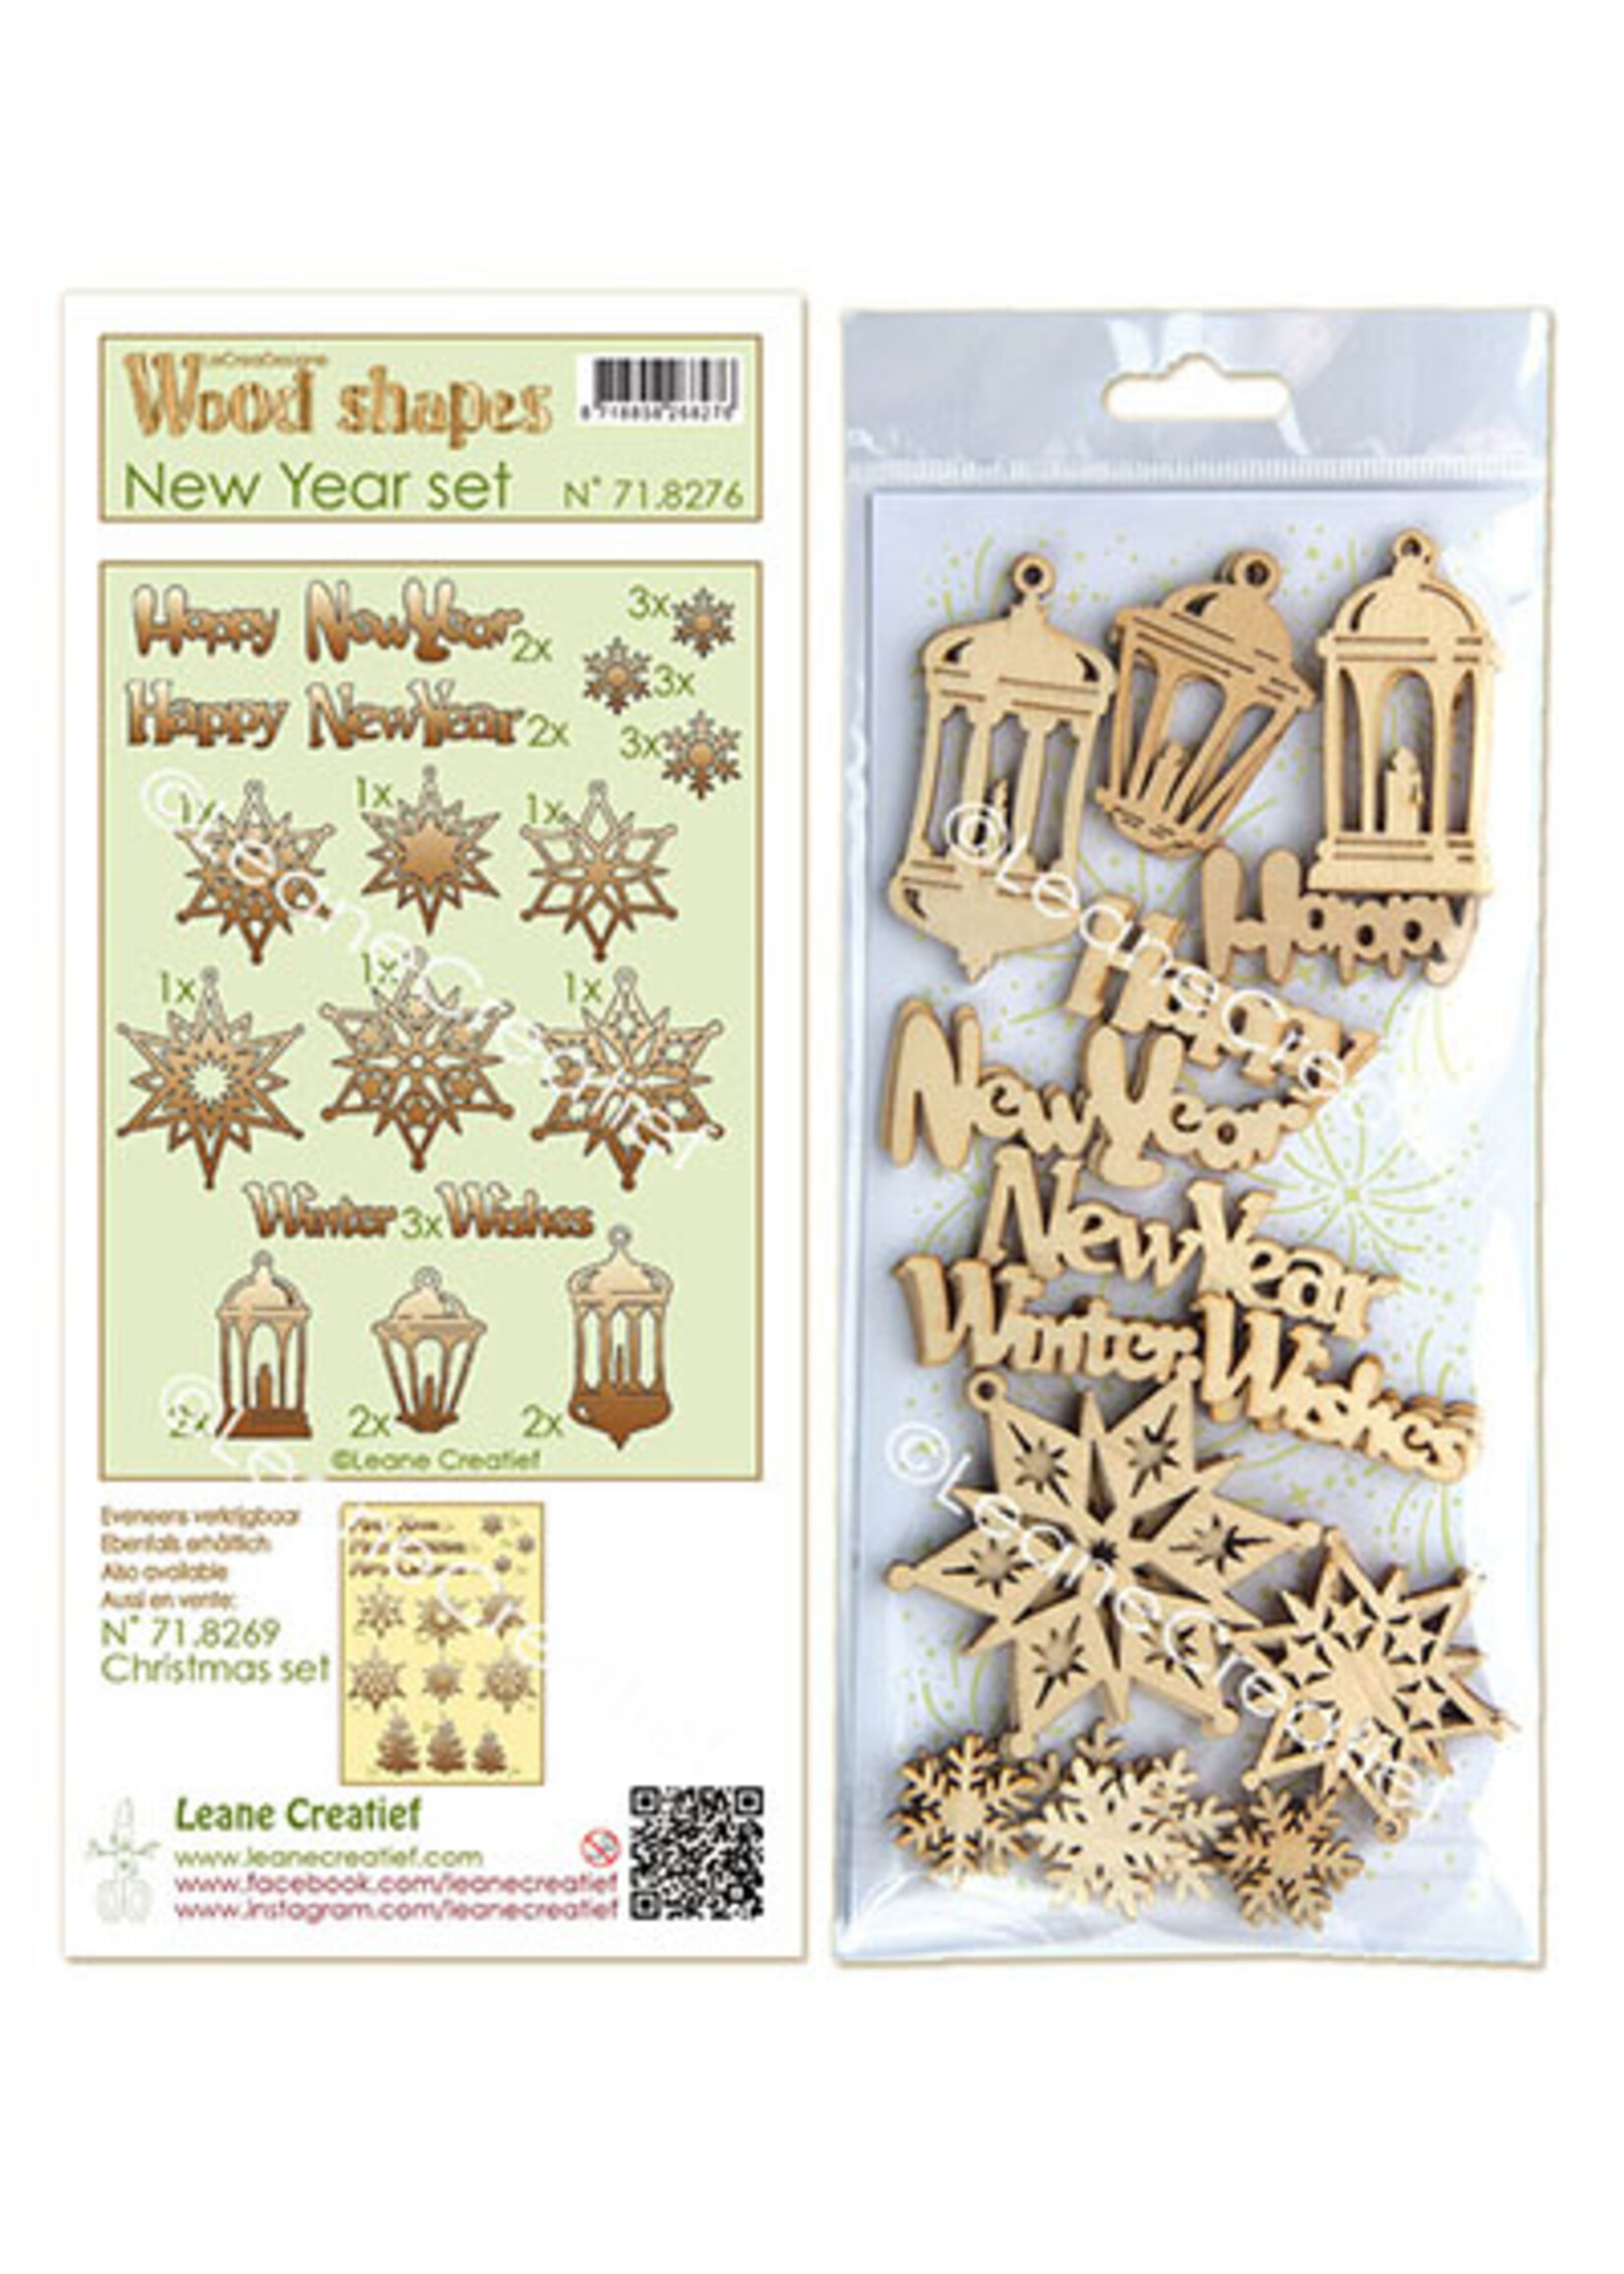 Leane Creatief 718.276 - Wood shapes KerstWood shapes Nieuwjaar